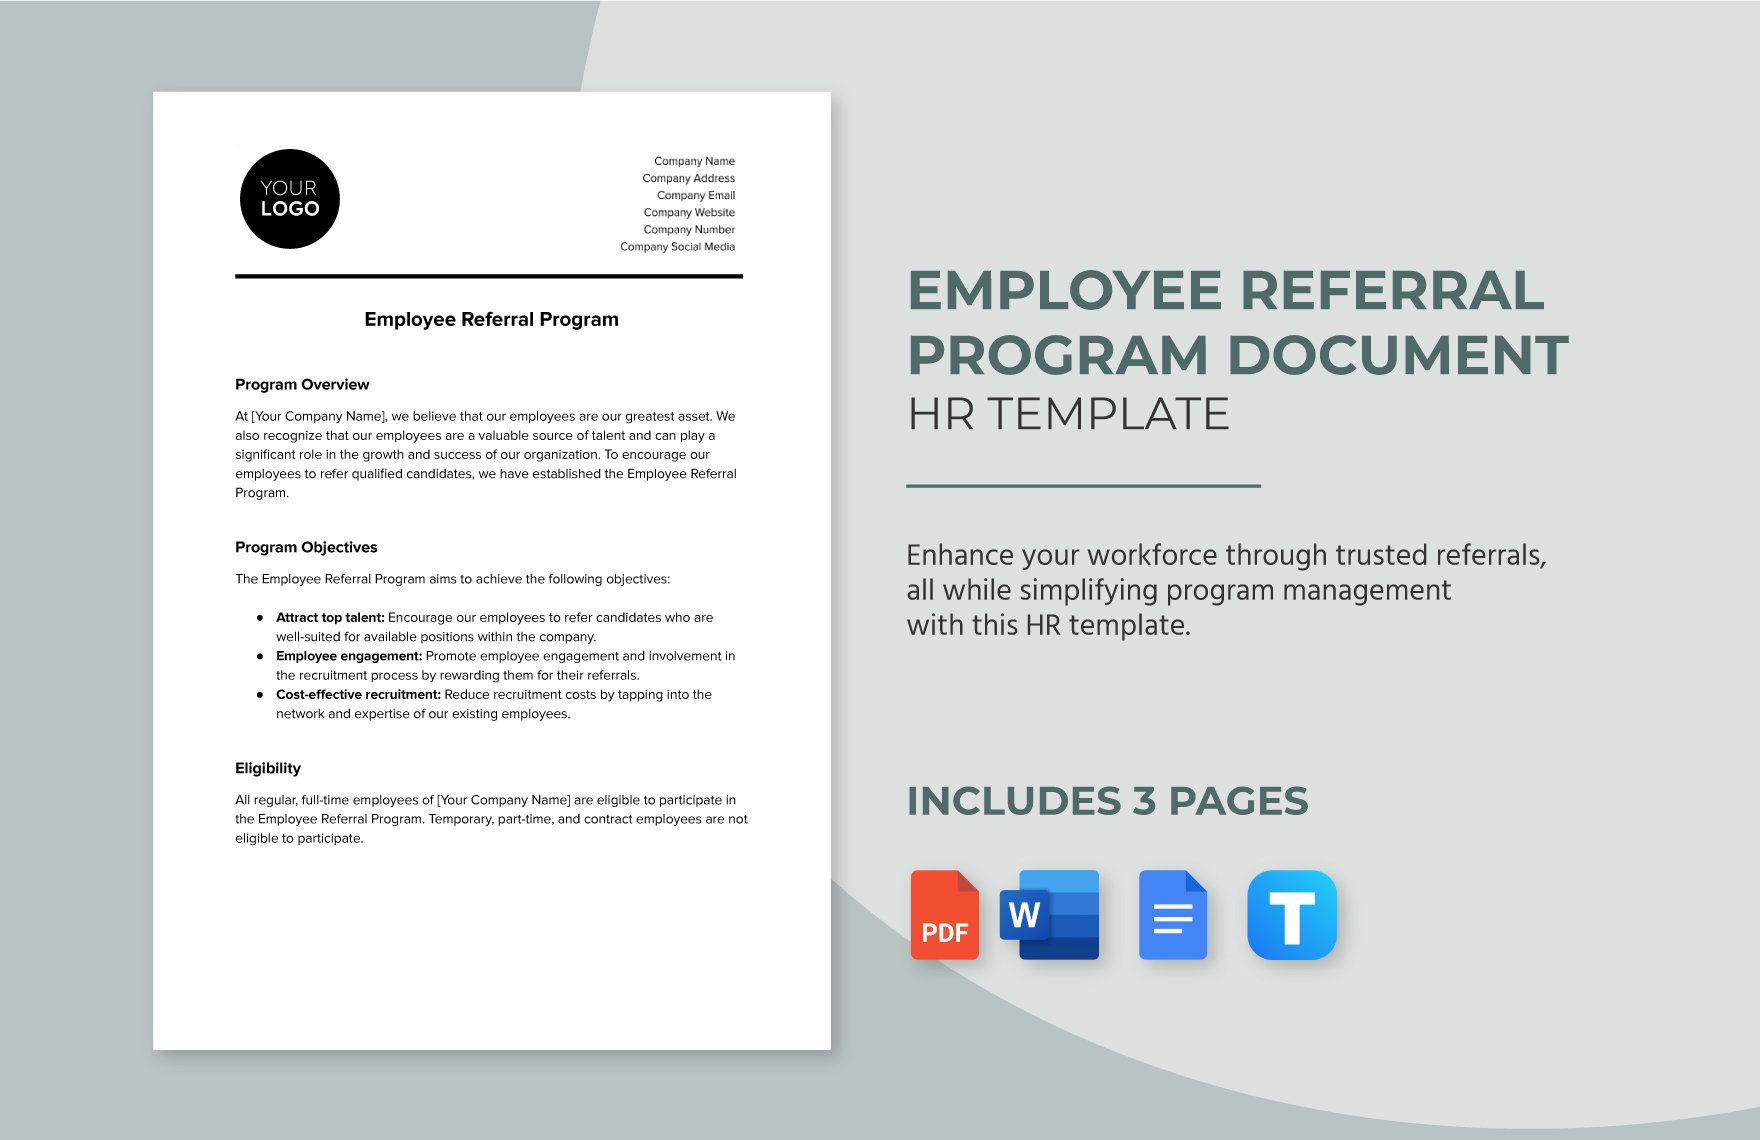 Employee Referral Program Document HR Template in Word, Google Docs, PDF